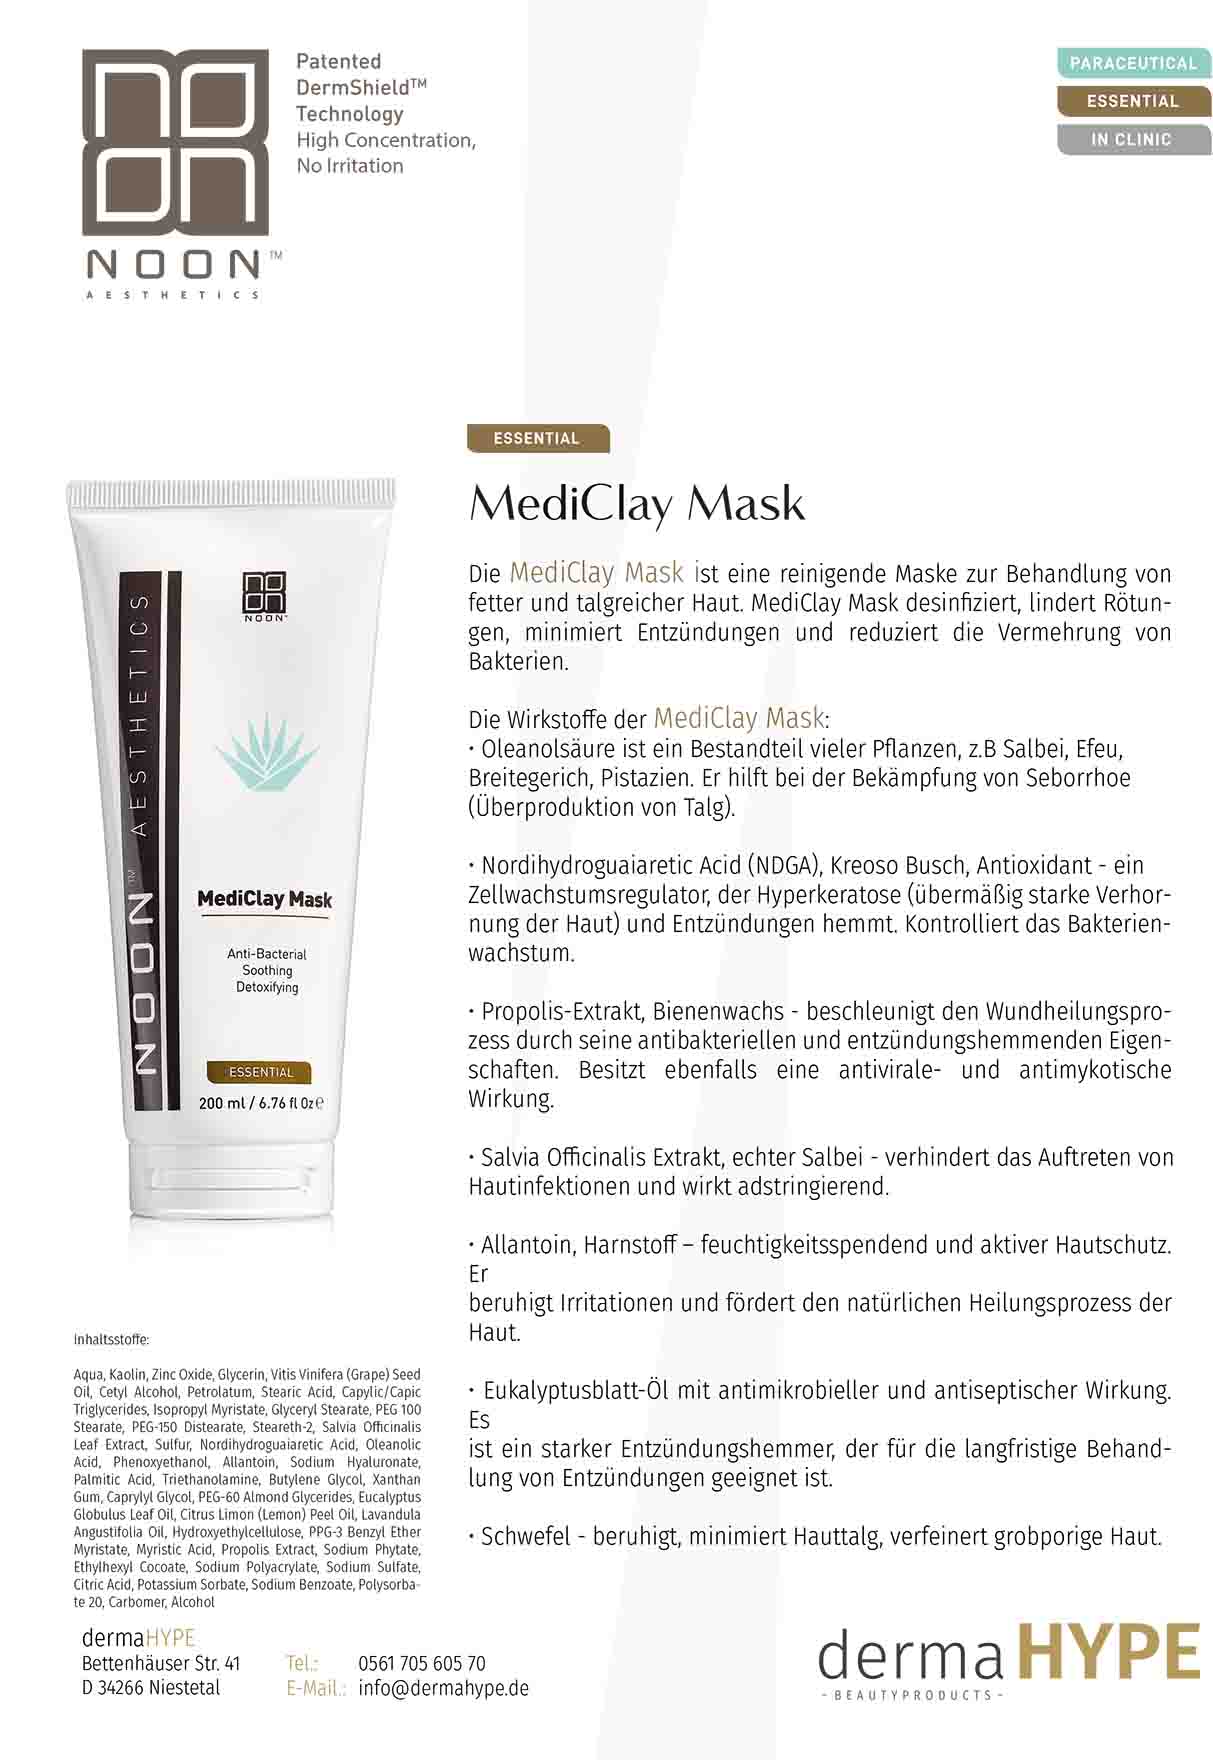 MediClay Mask leaflet | Yuliskin Kosmetik Studio